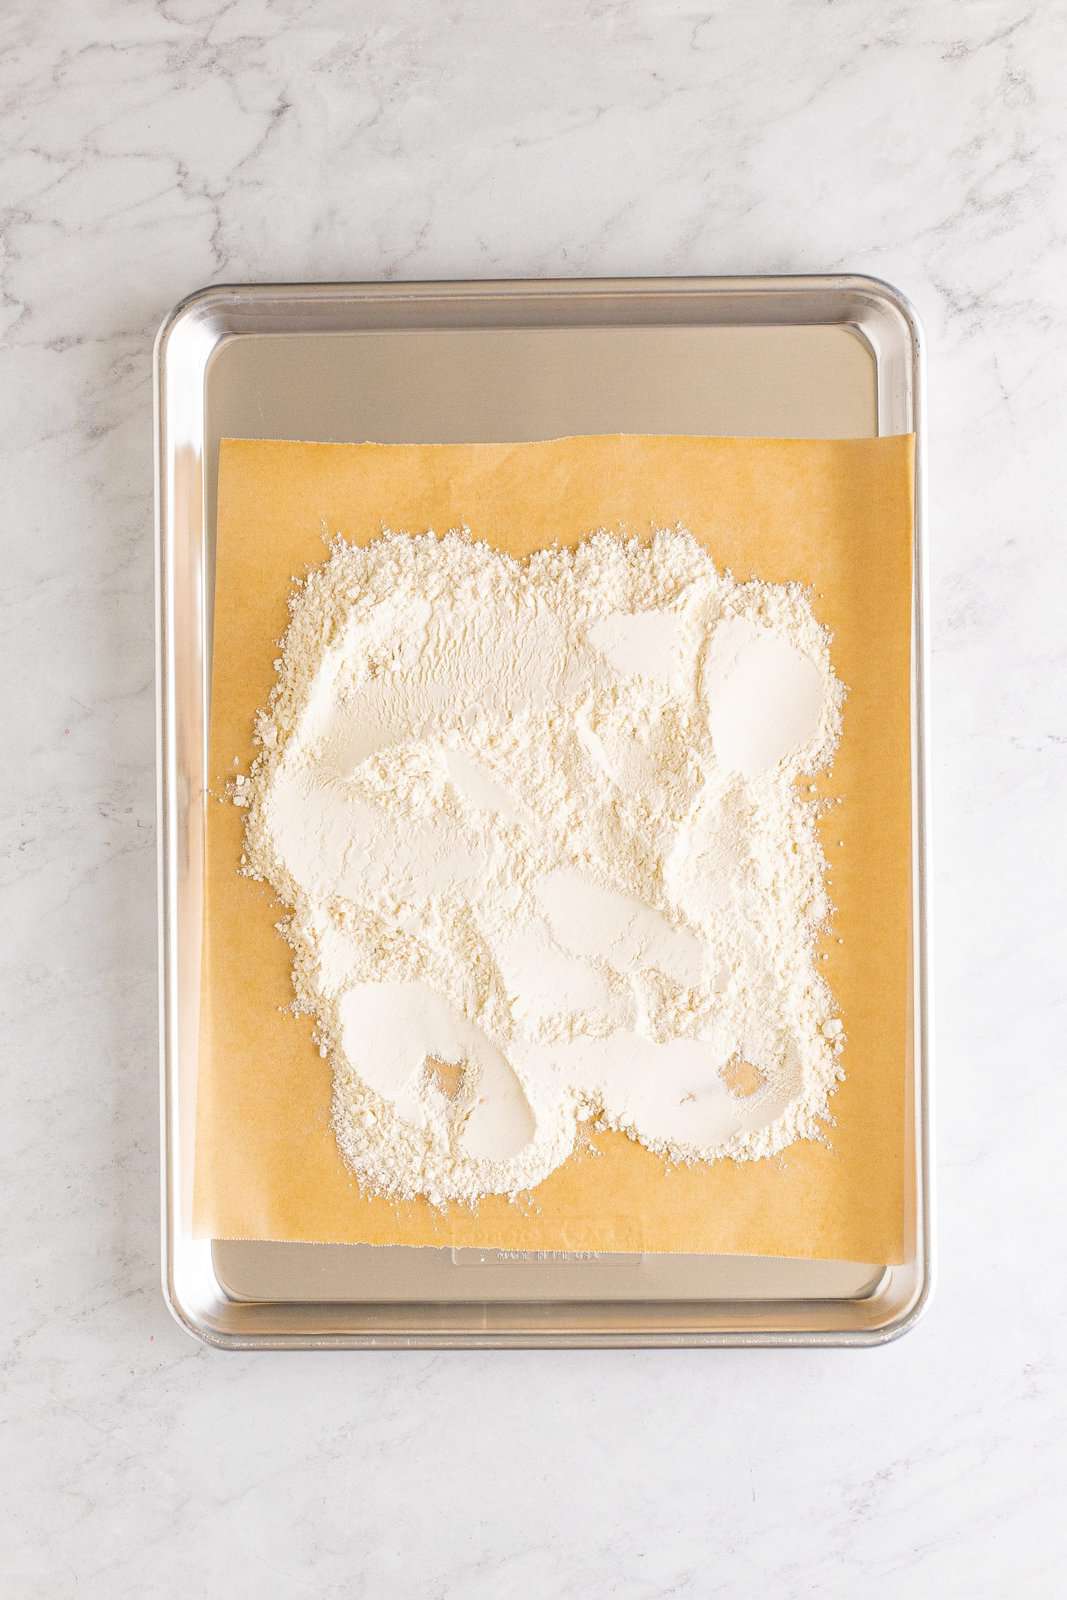 Flour on baking sheet.